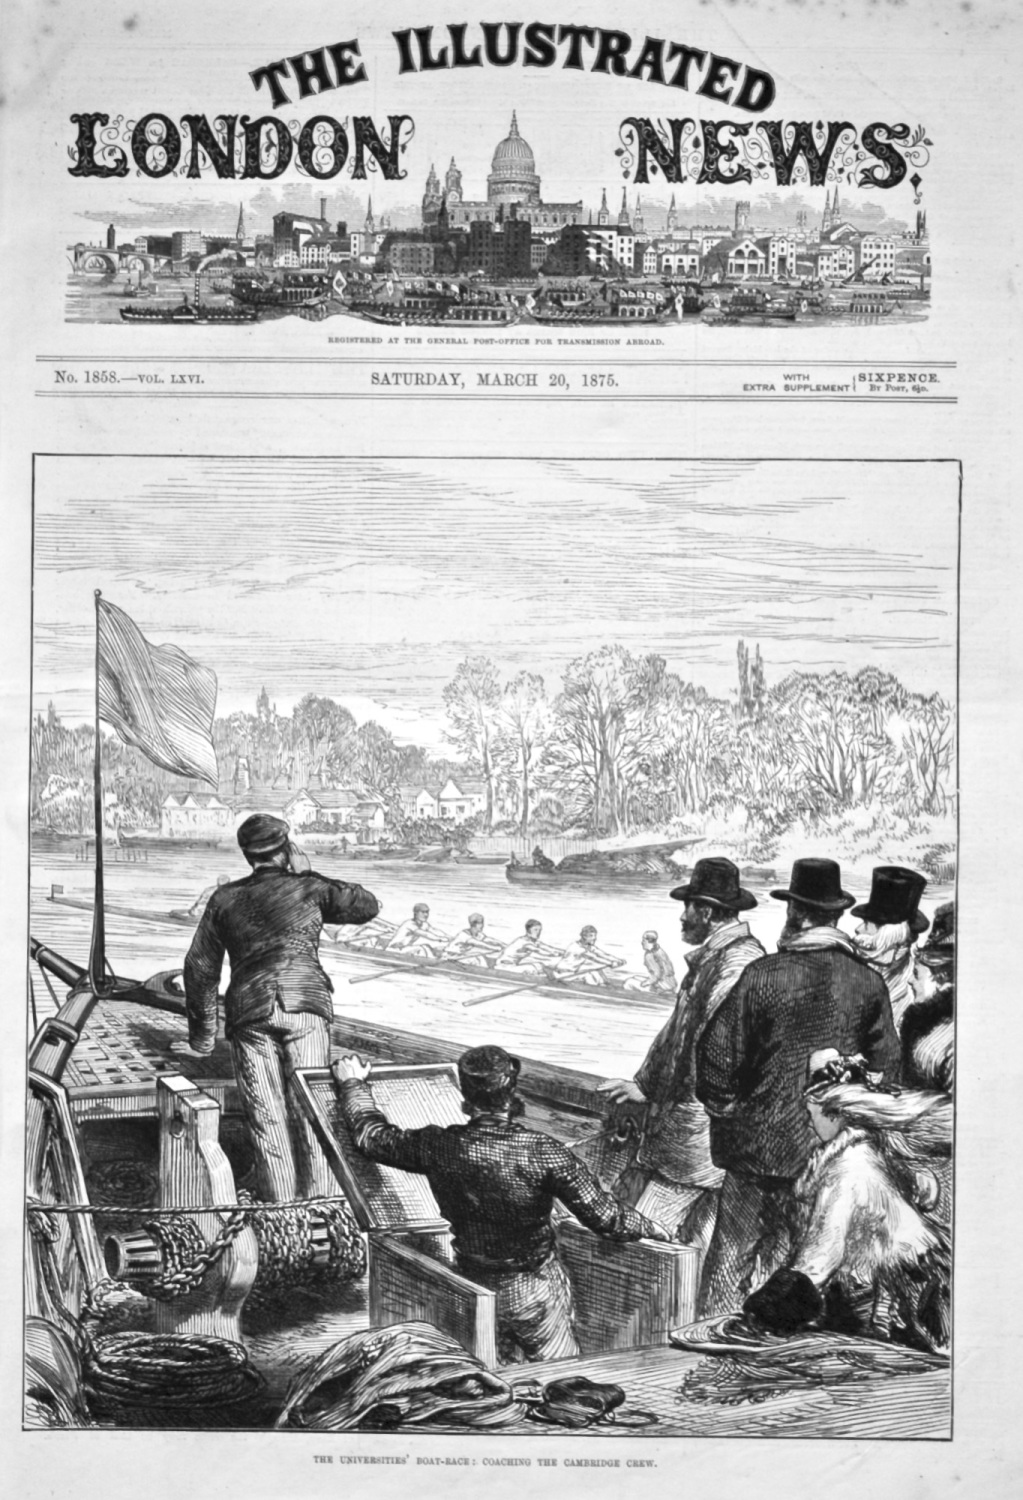 The Universities' Boat-Race : Coaching the Cambridge Crew. 1875.